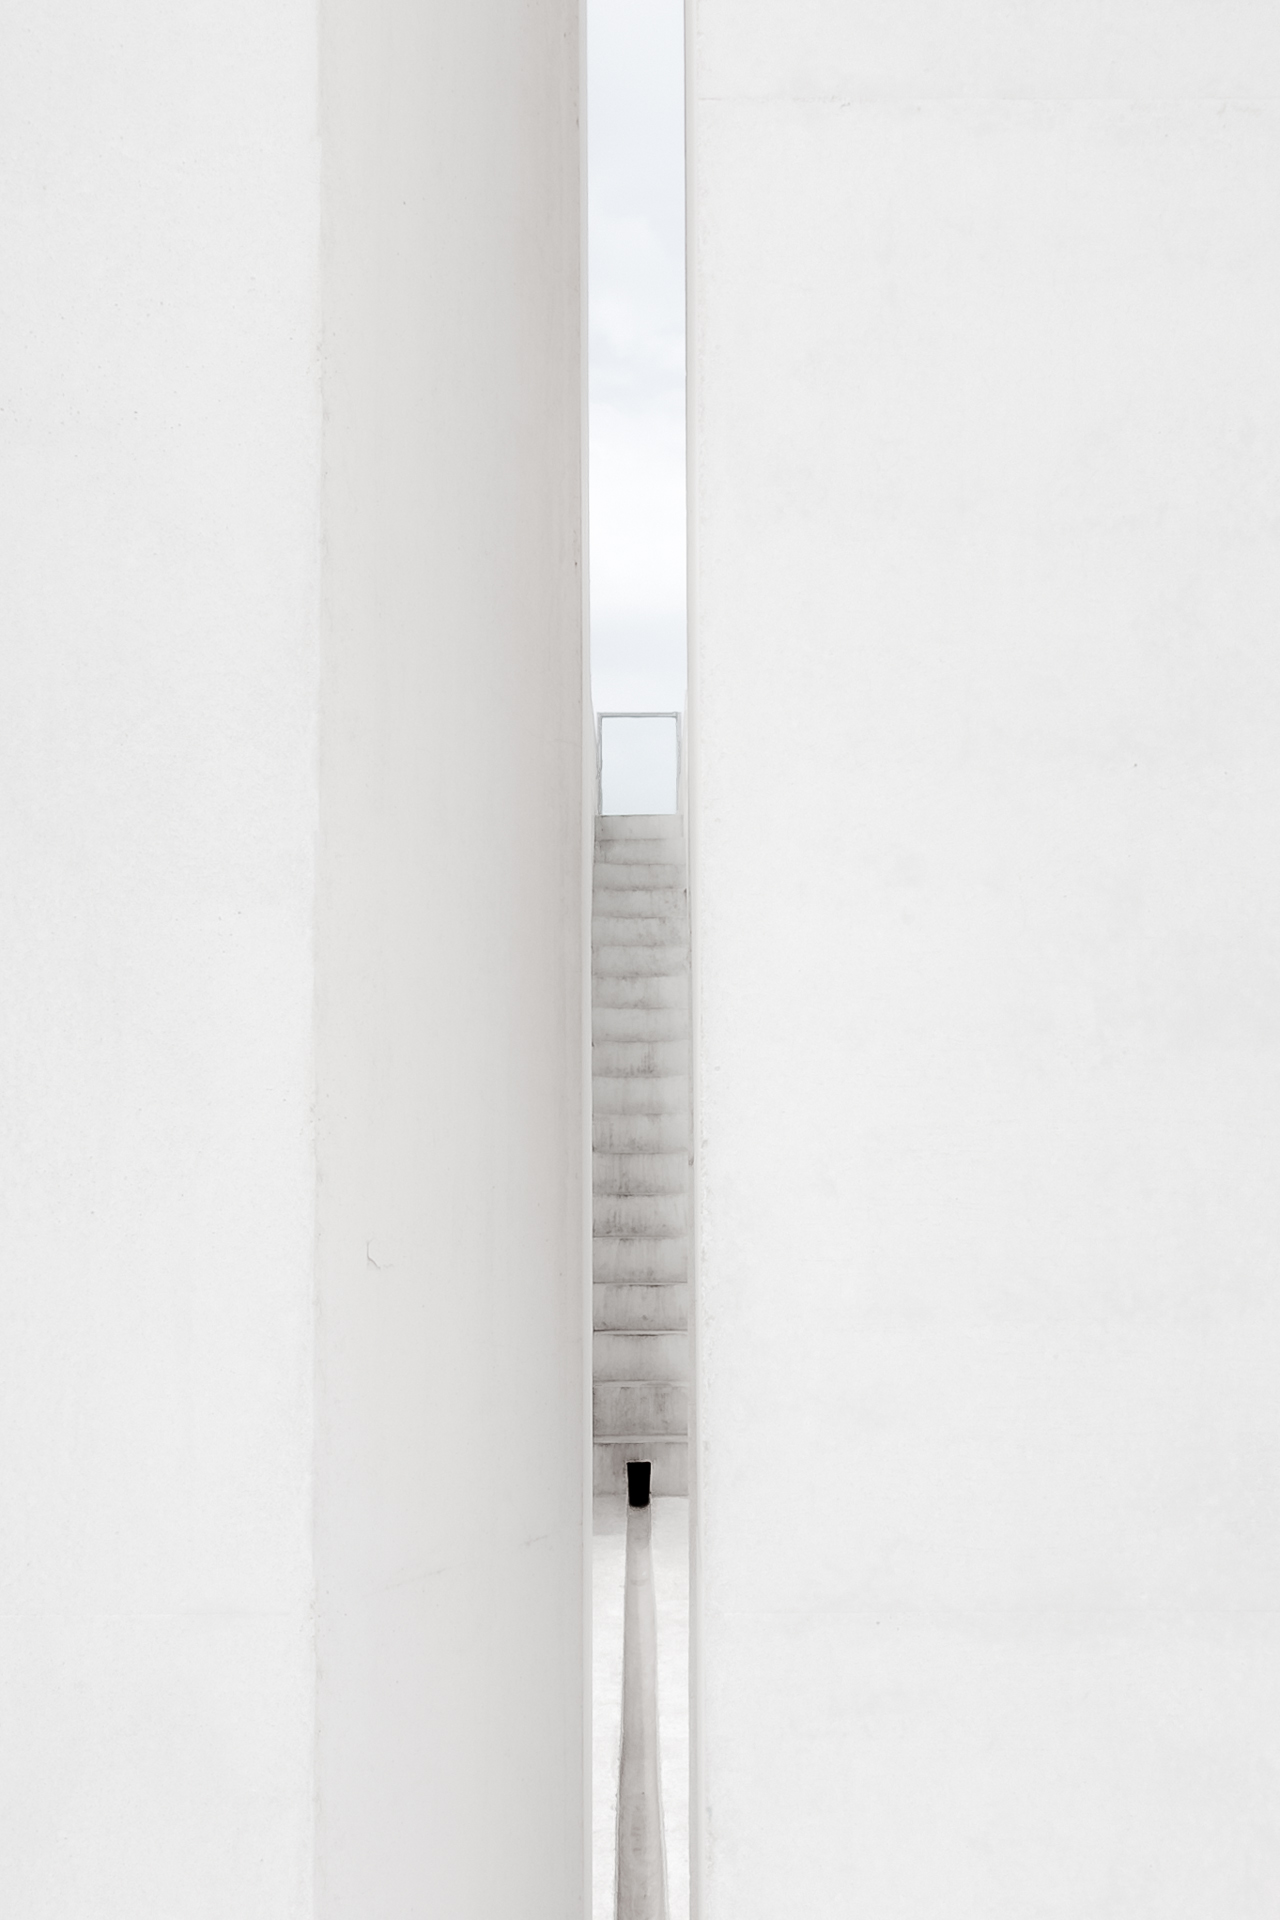 White Square by Danni Karavan / Richard Jochum